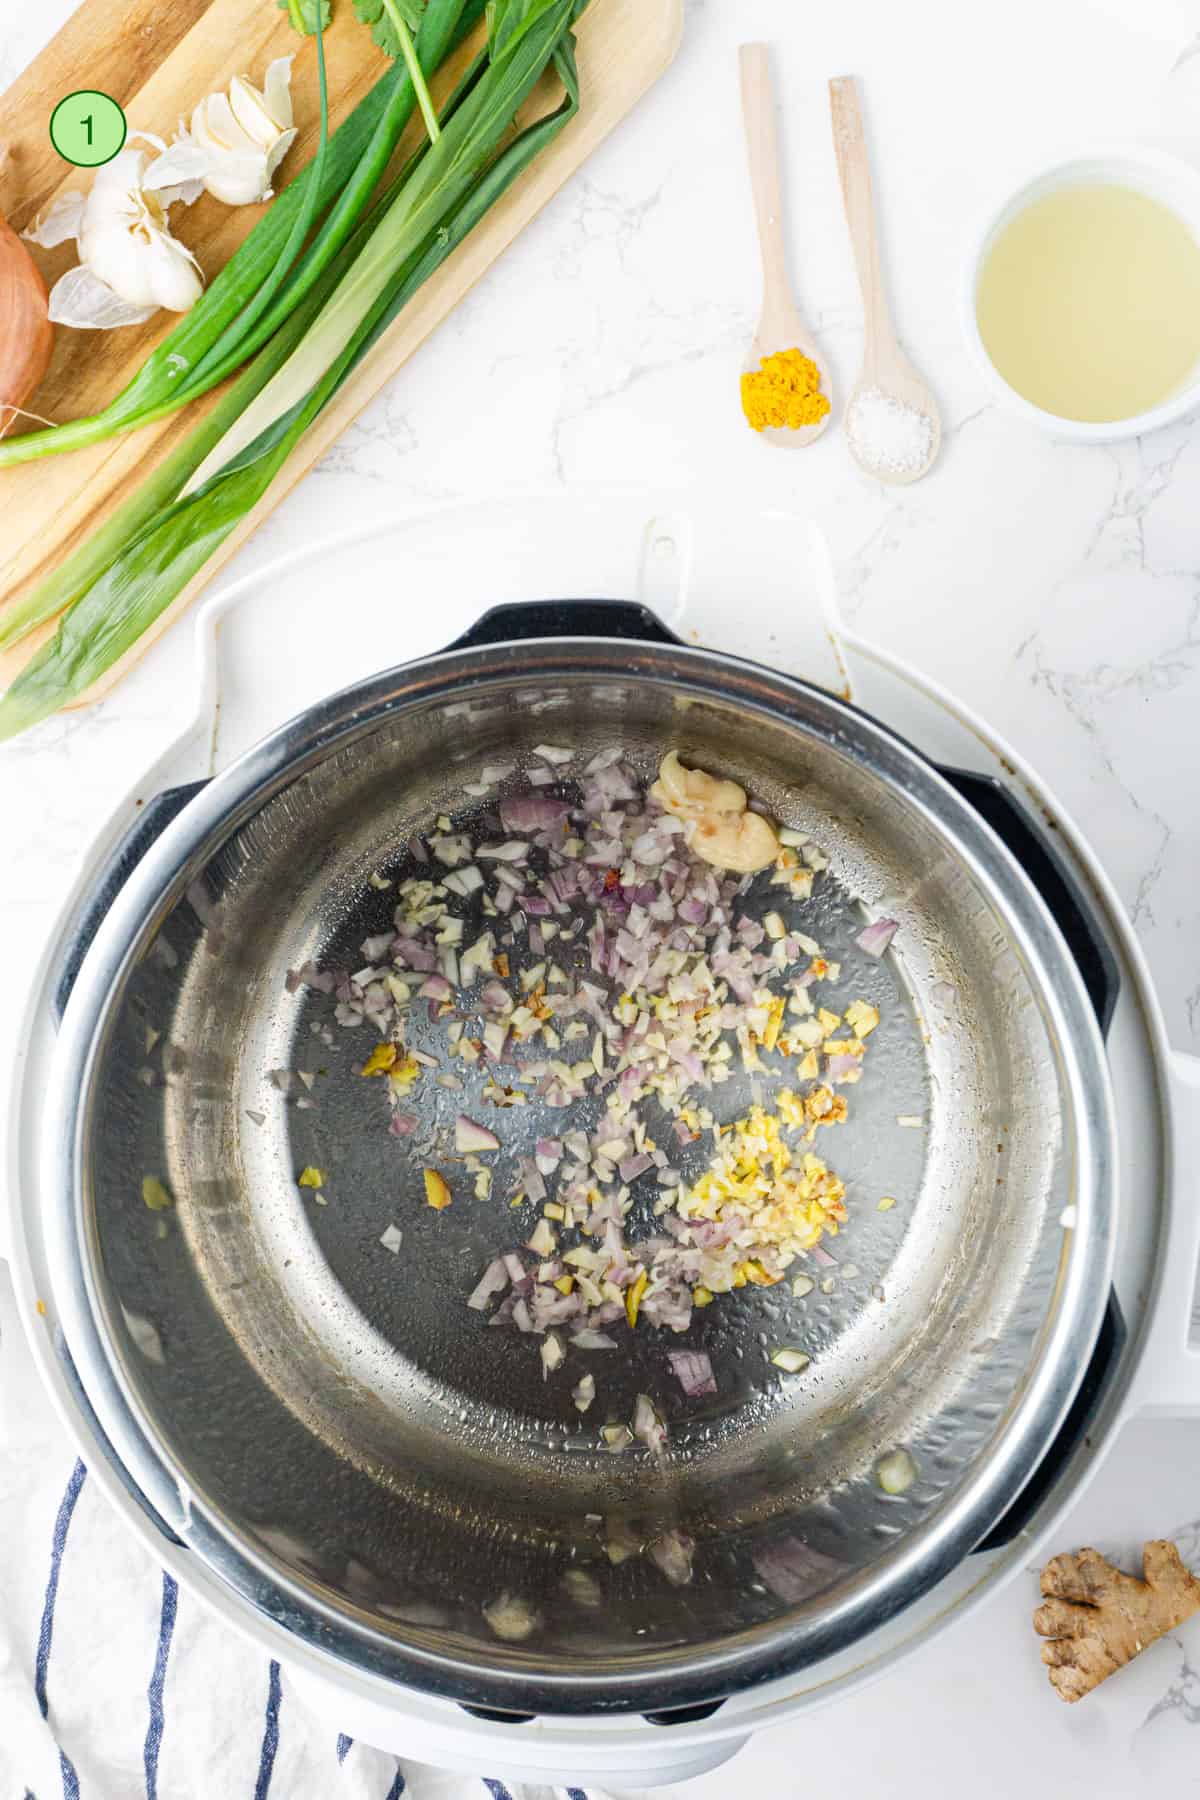 Saute the aromatics in the instant pot.